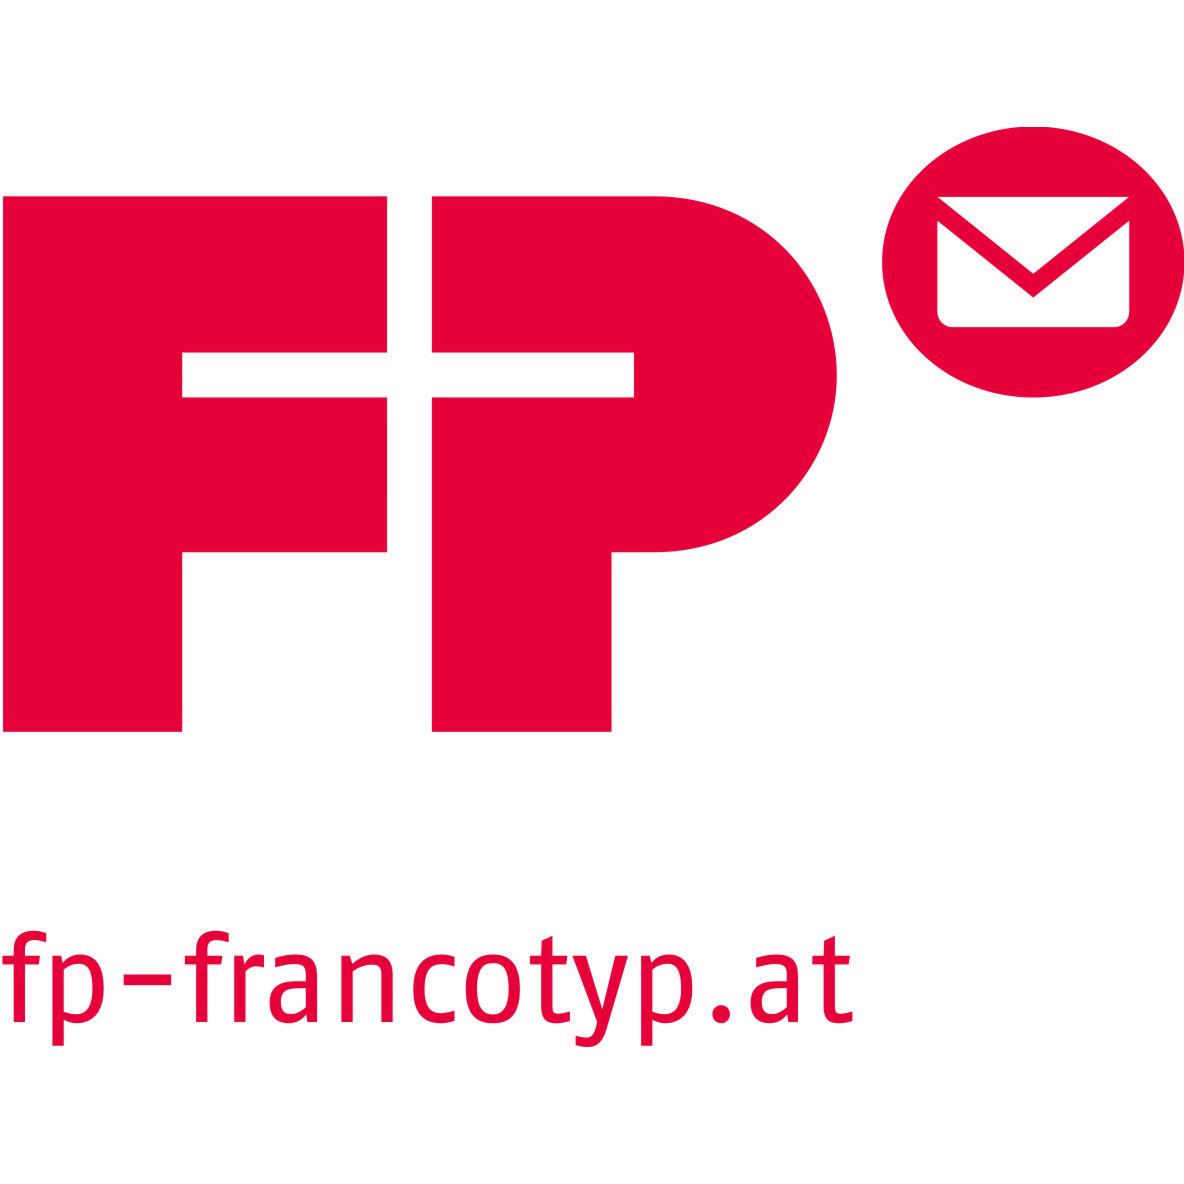 Francotyp-Postalia in Wien LOGO